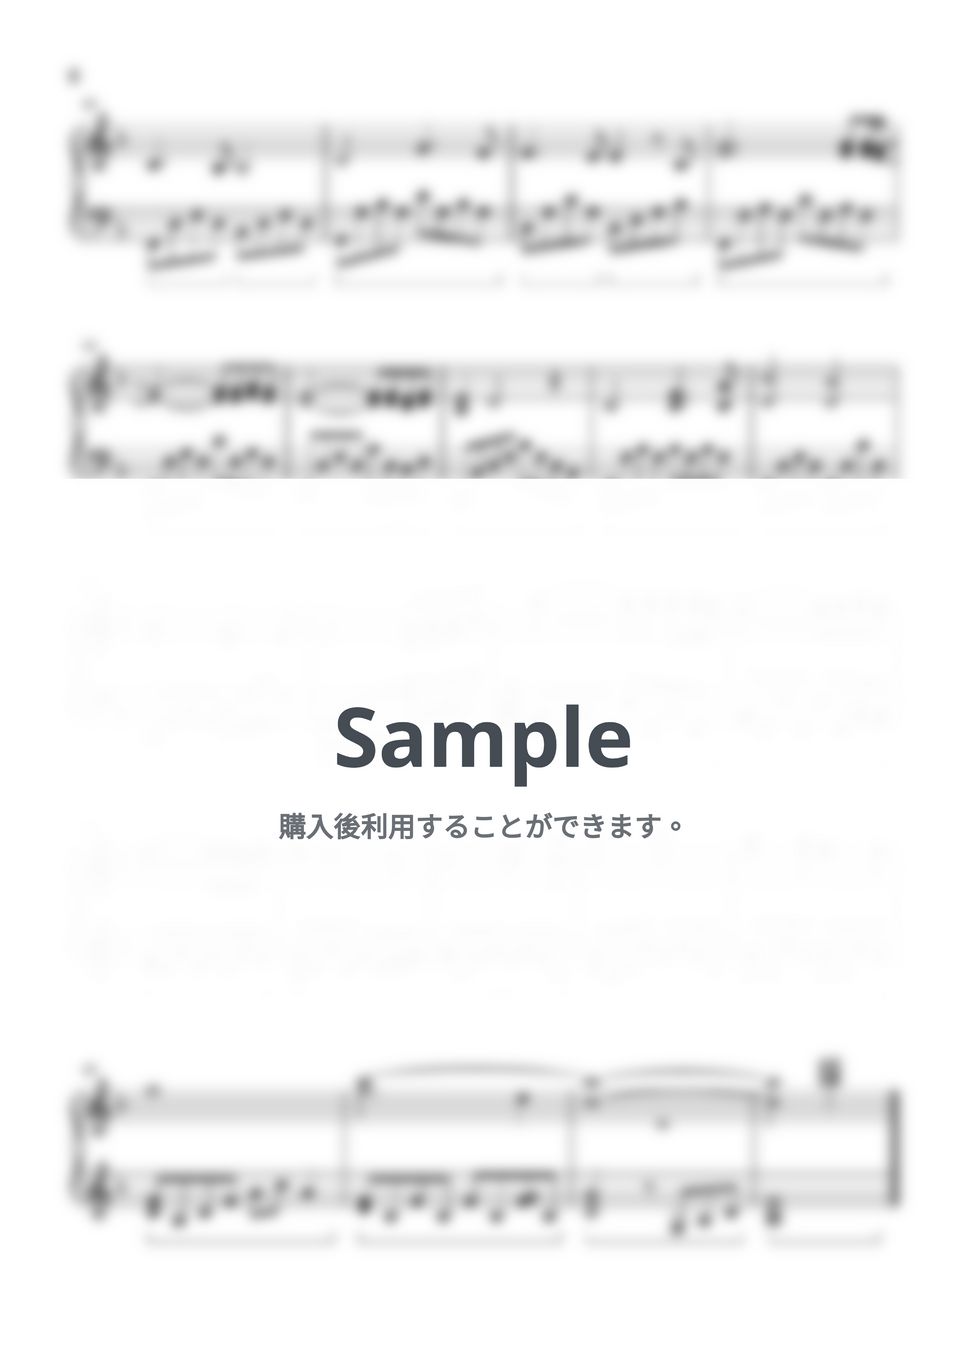 Believe by ピアノ塾